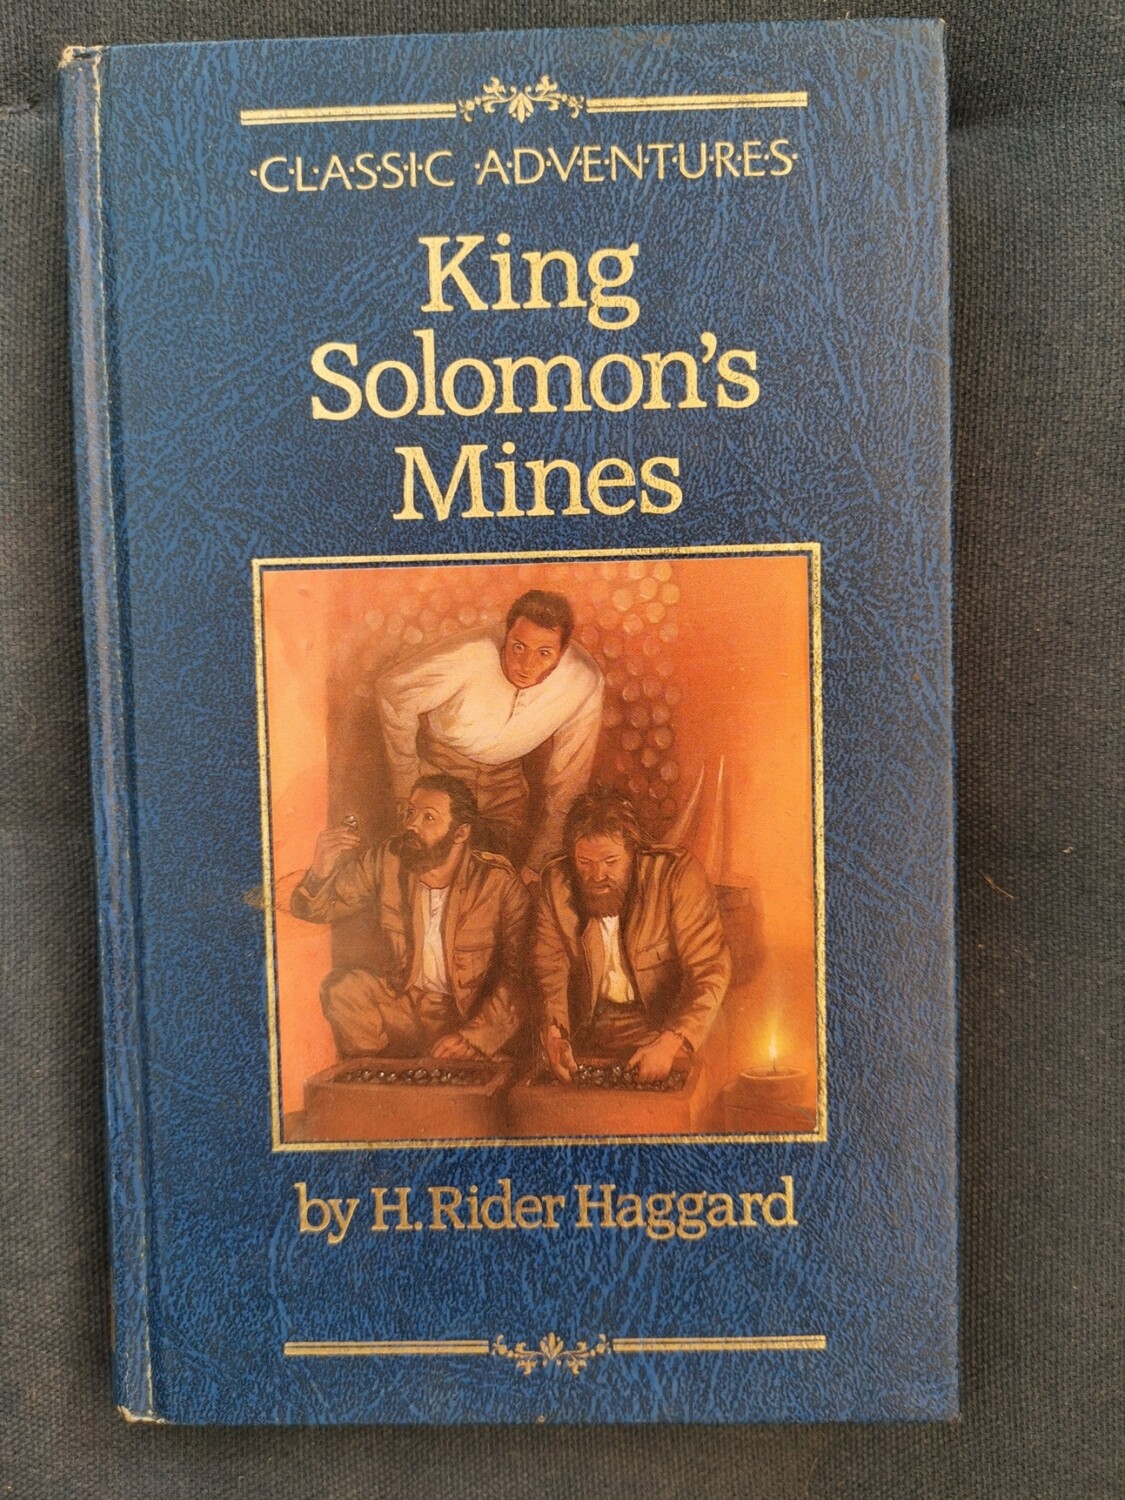 King Solomons mines, H. Rider Haggard